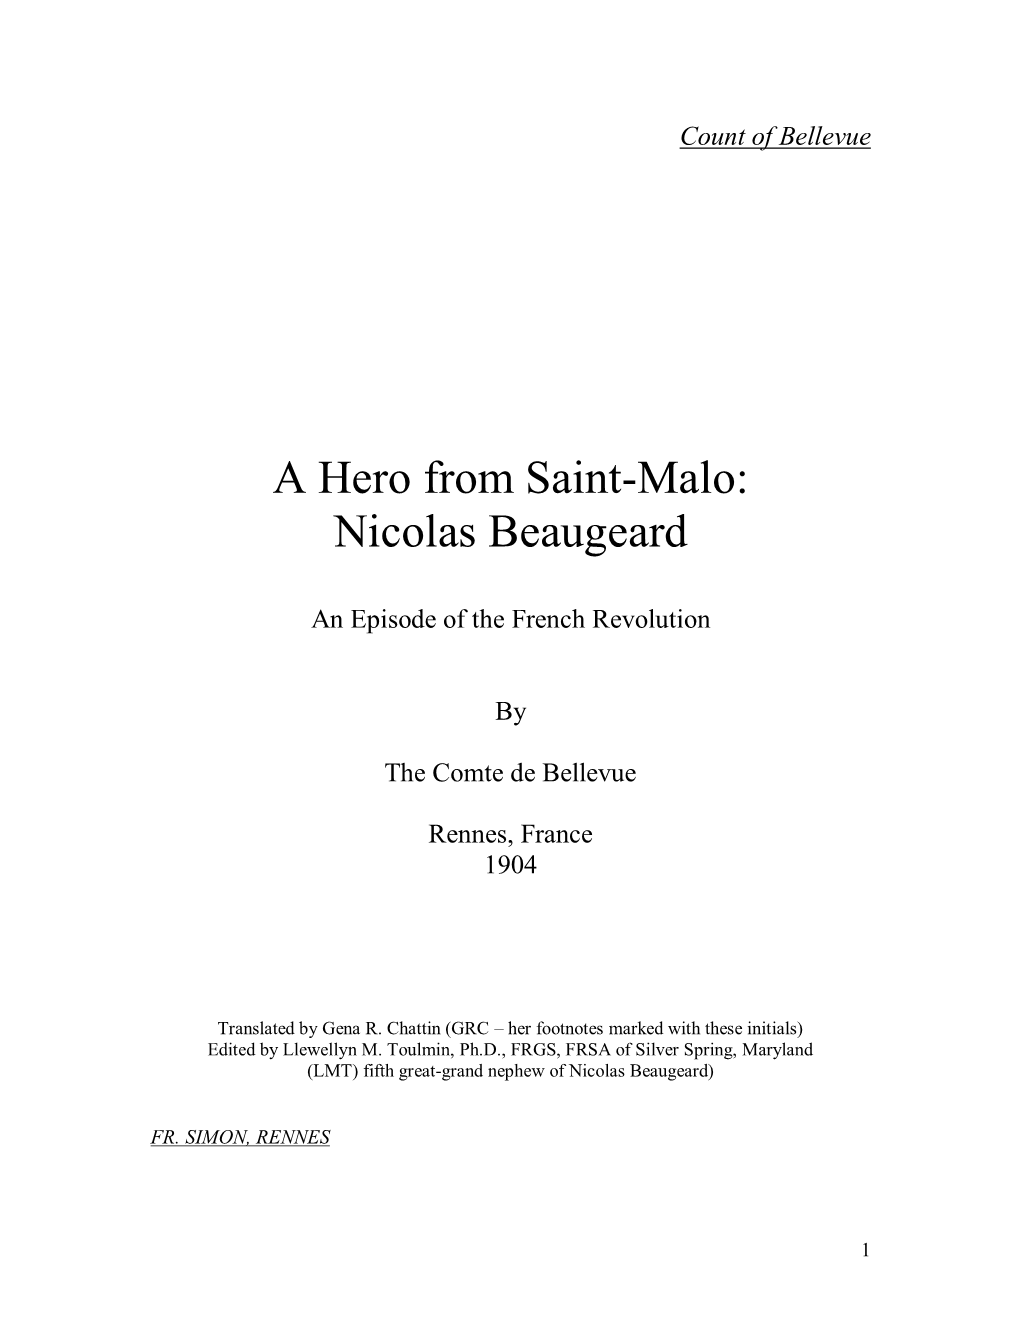 A Hero from Saint-Malo: Nicolas Beaugeard